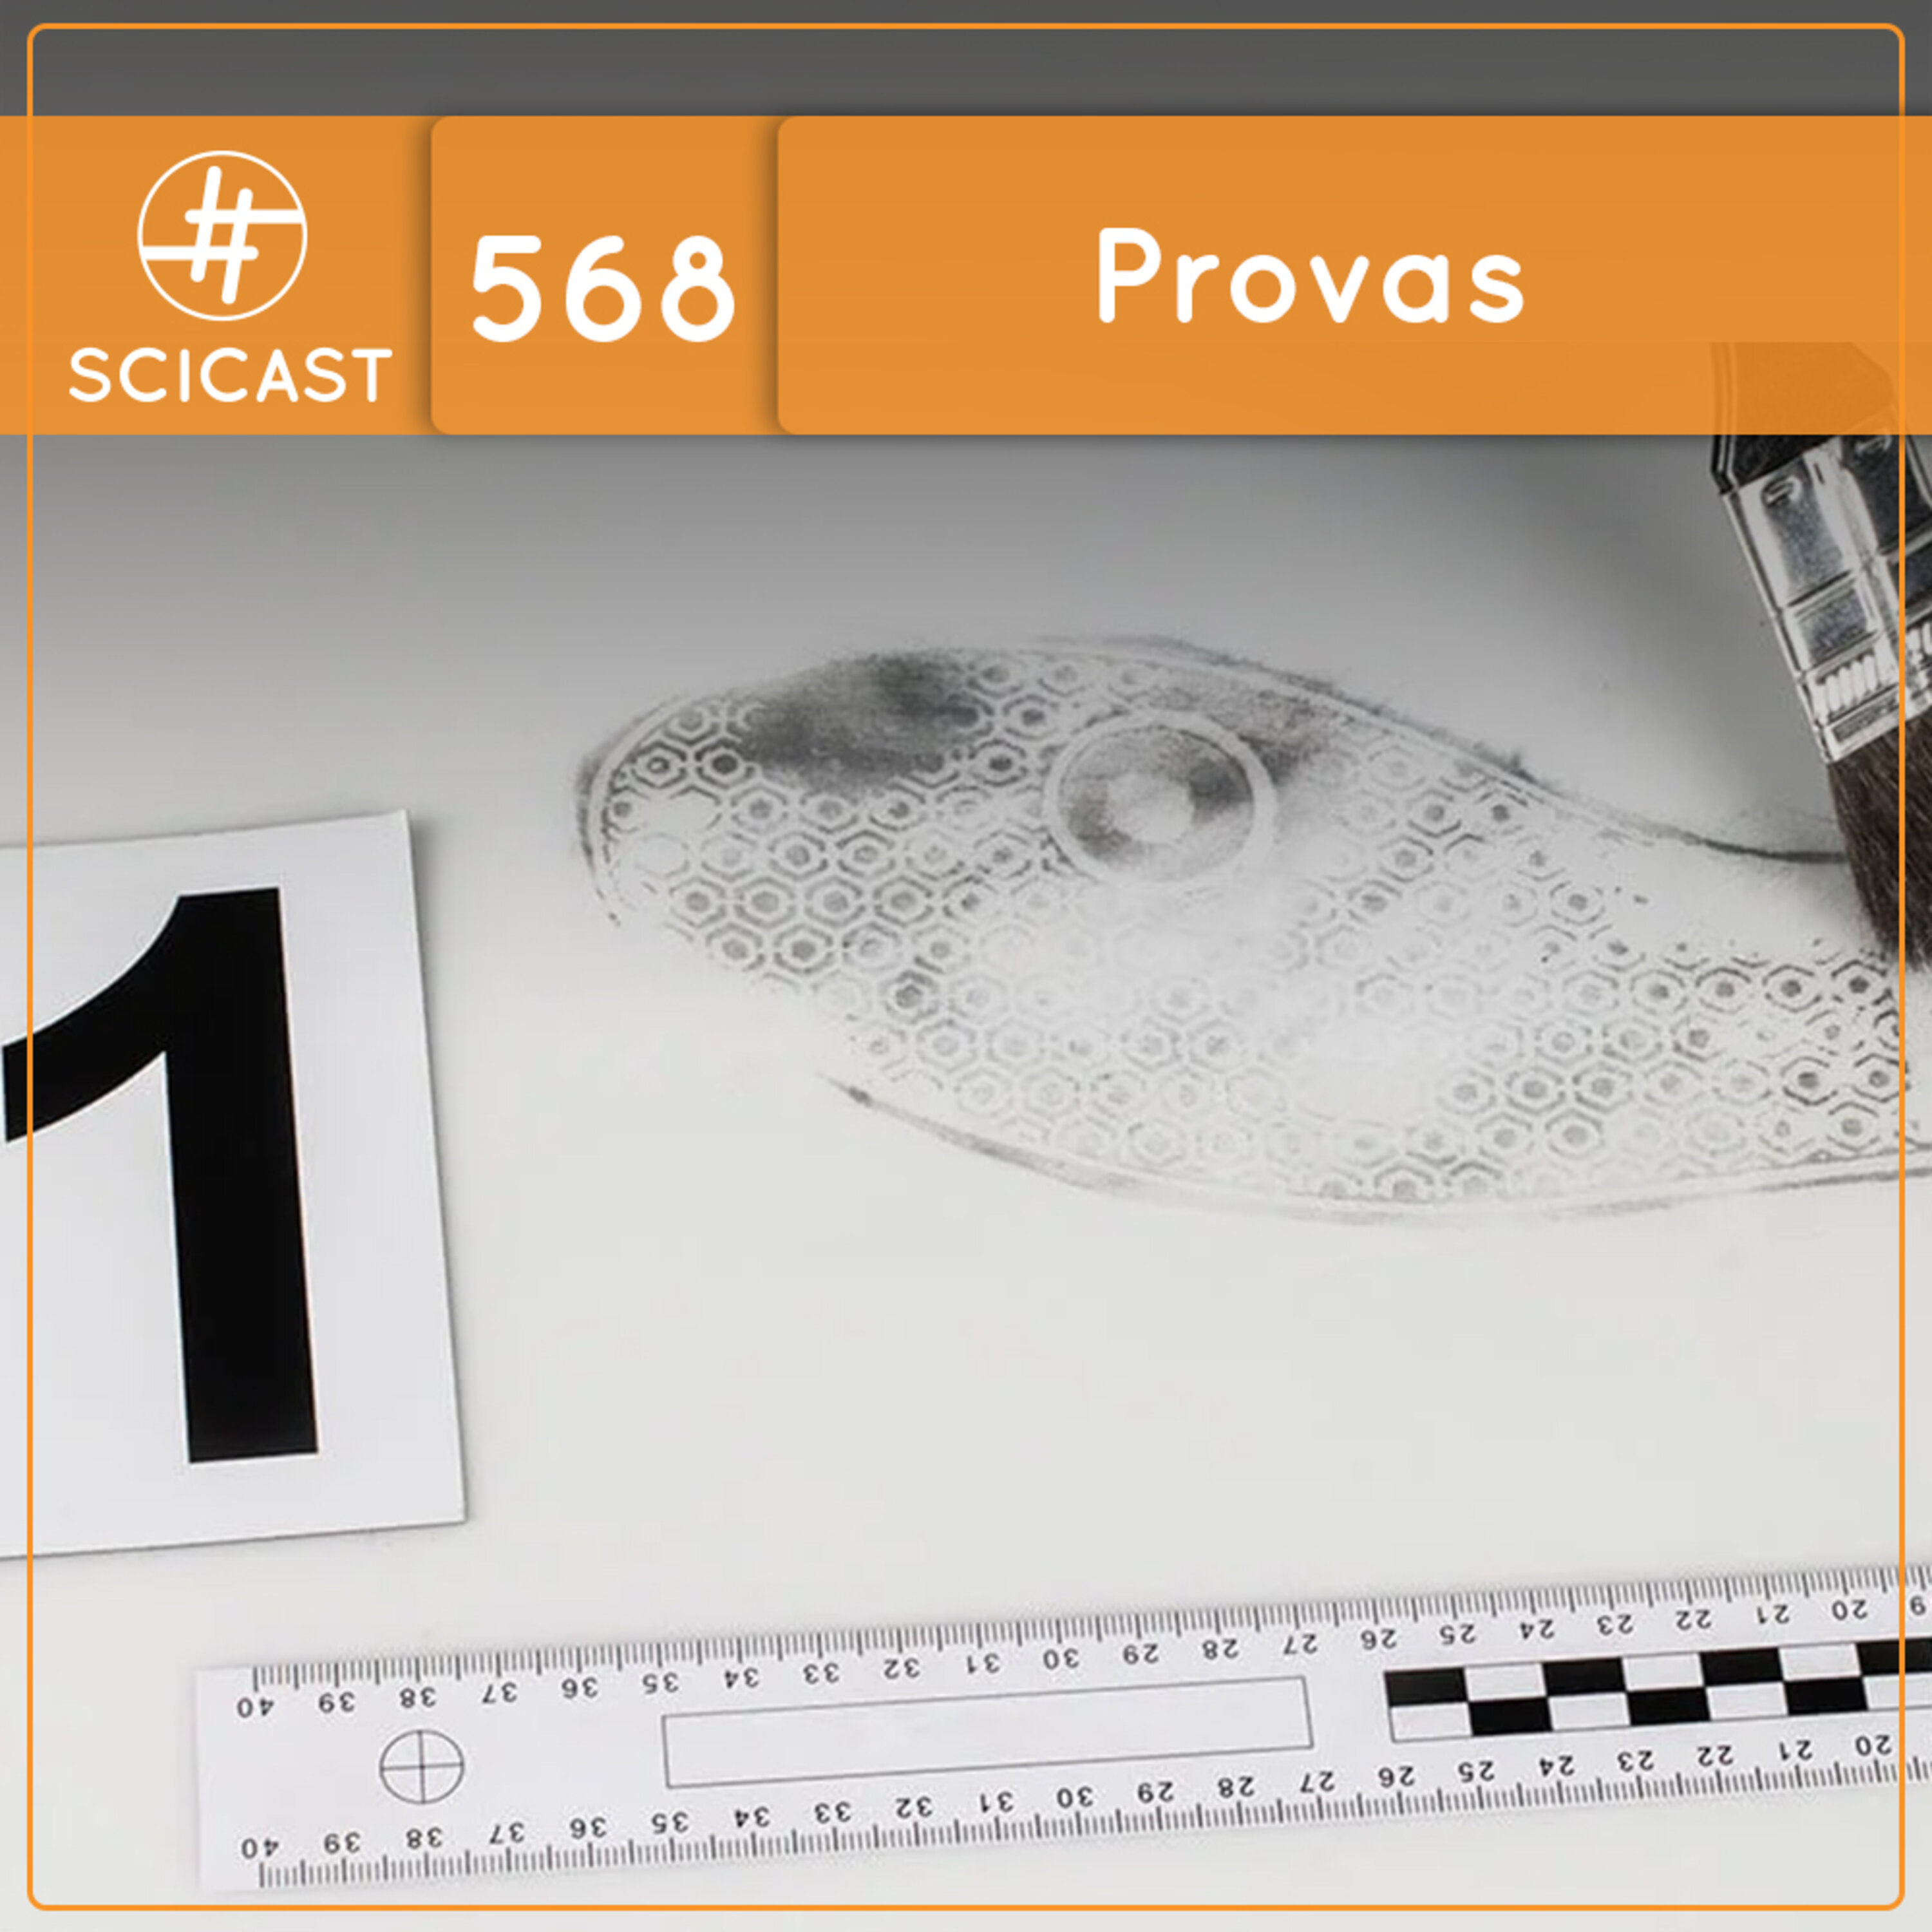 Provas (SciCast #568)